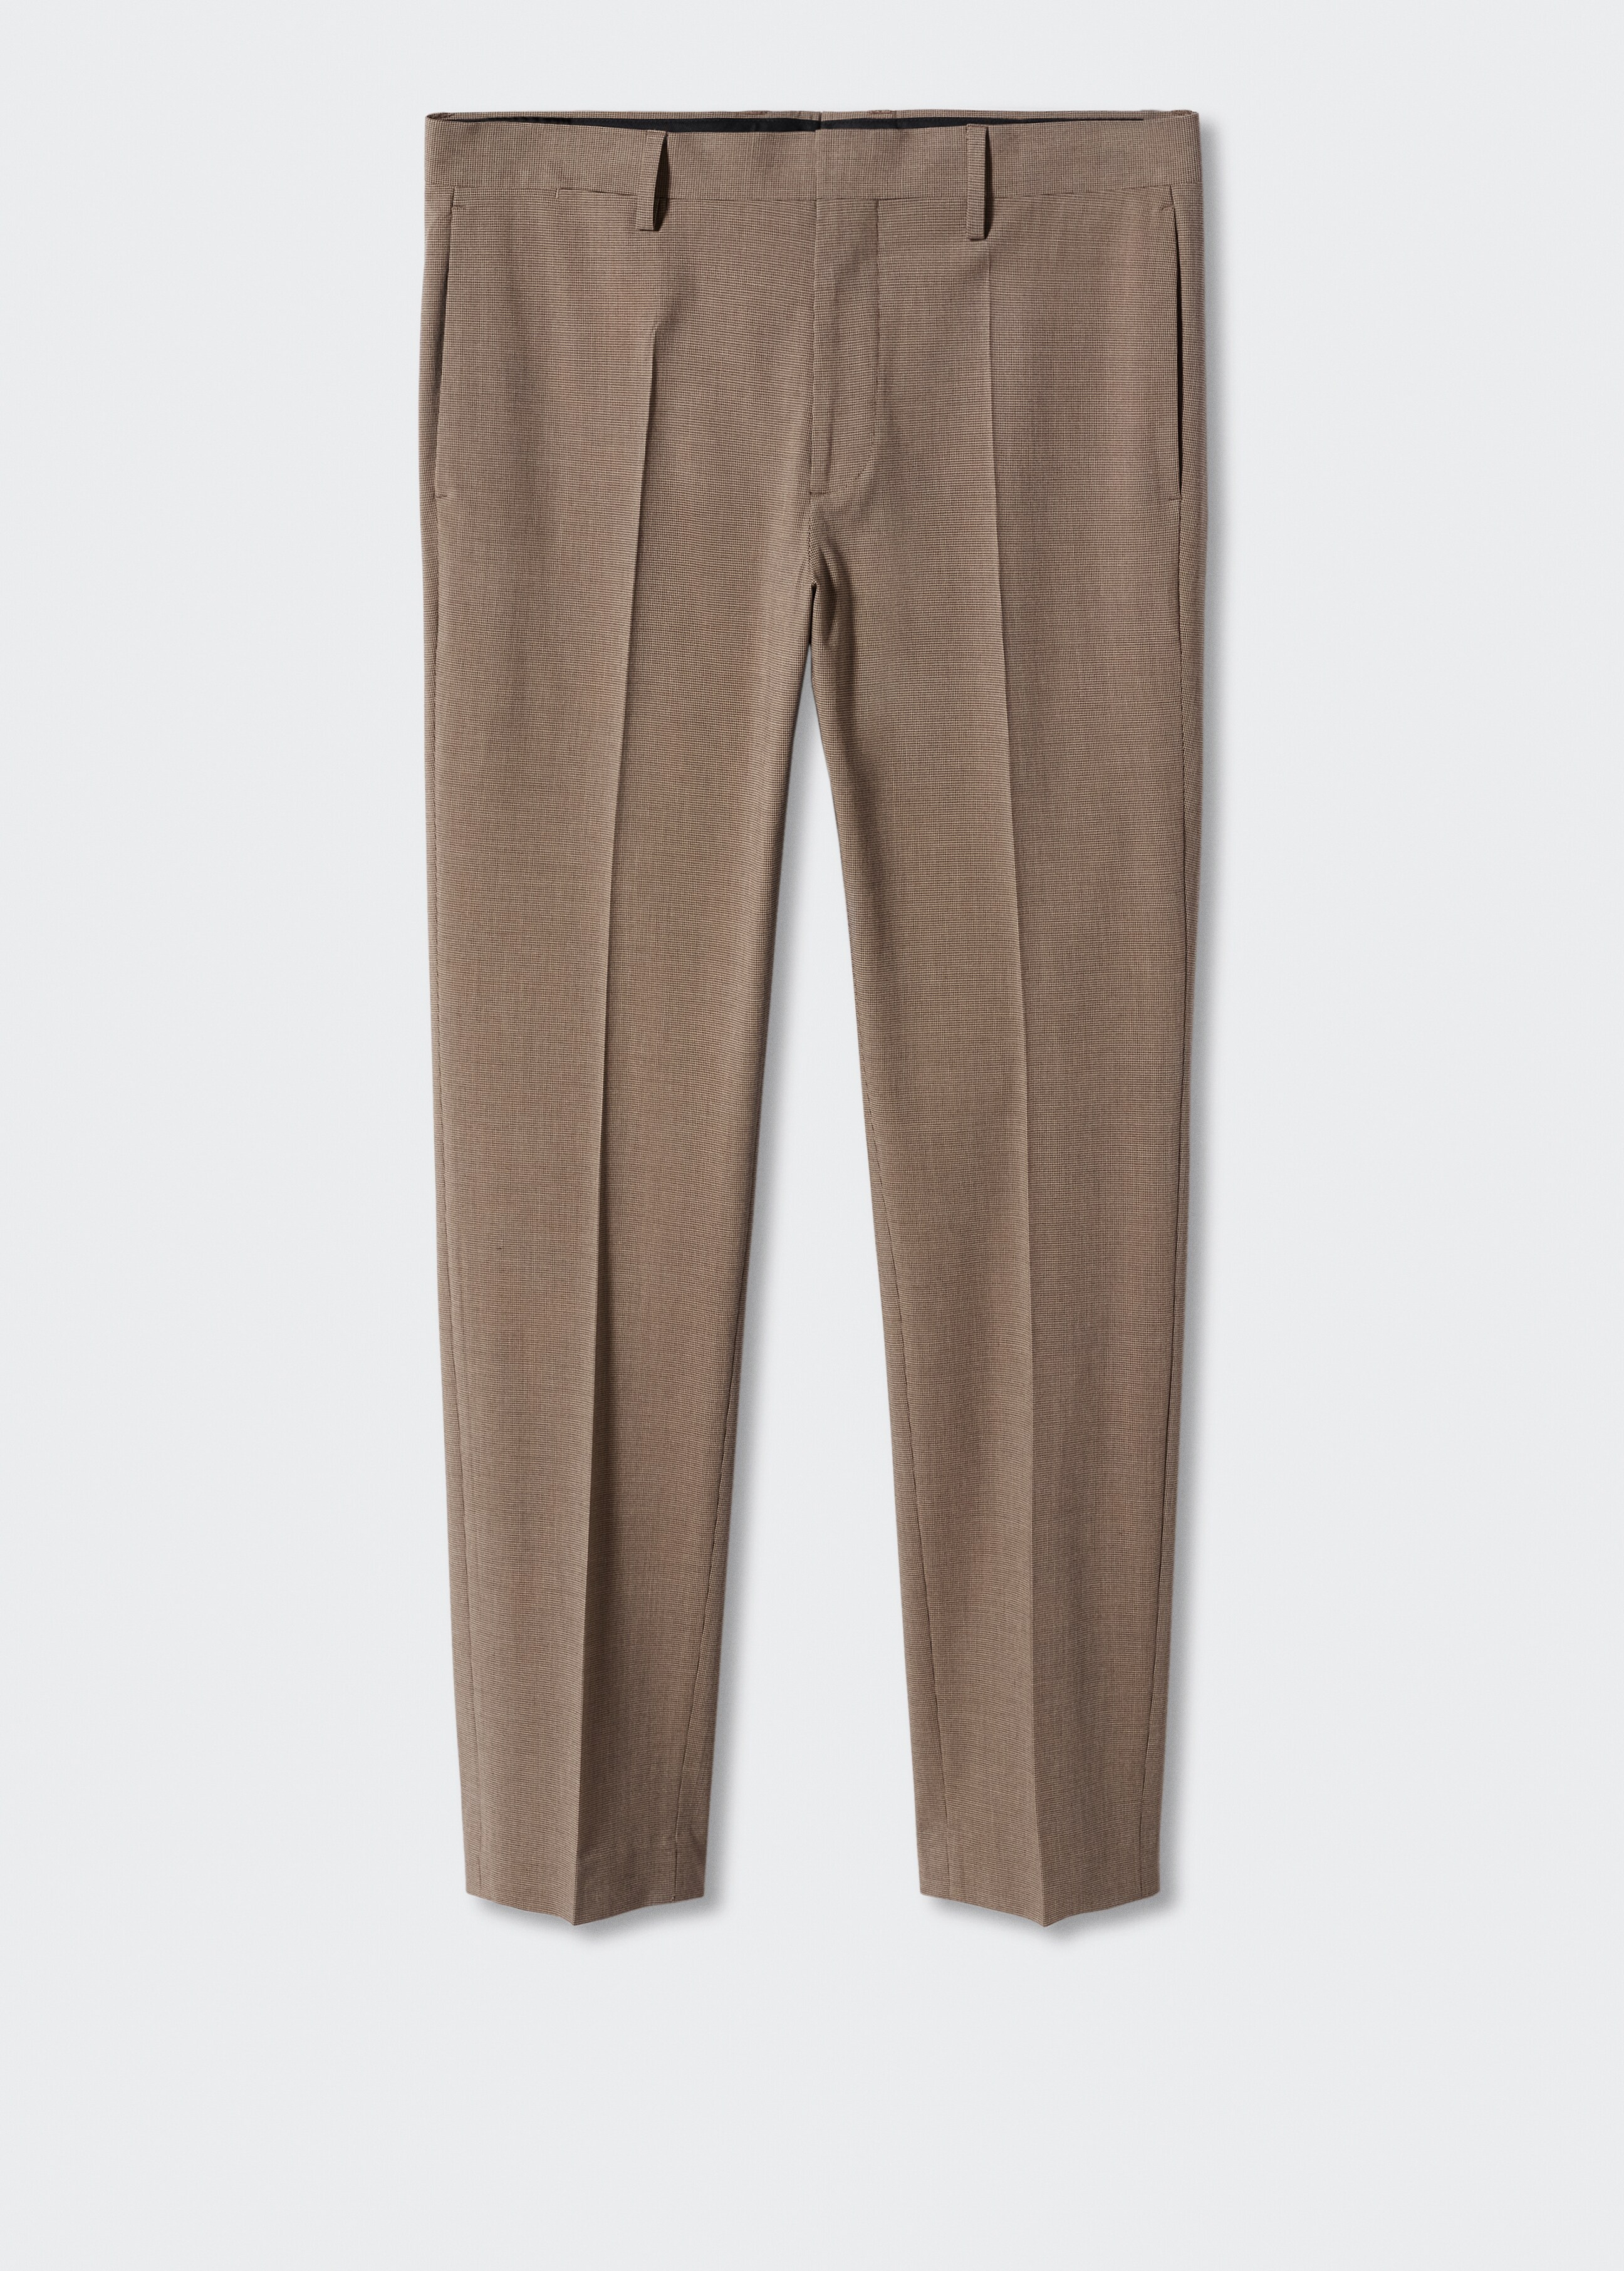 Pantalons vestir súper slim fit - Article sense model